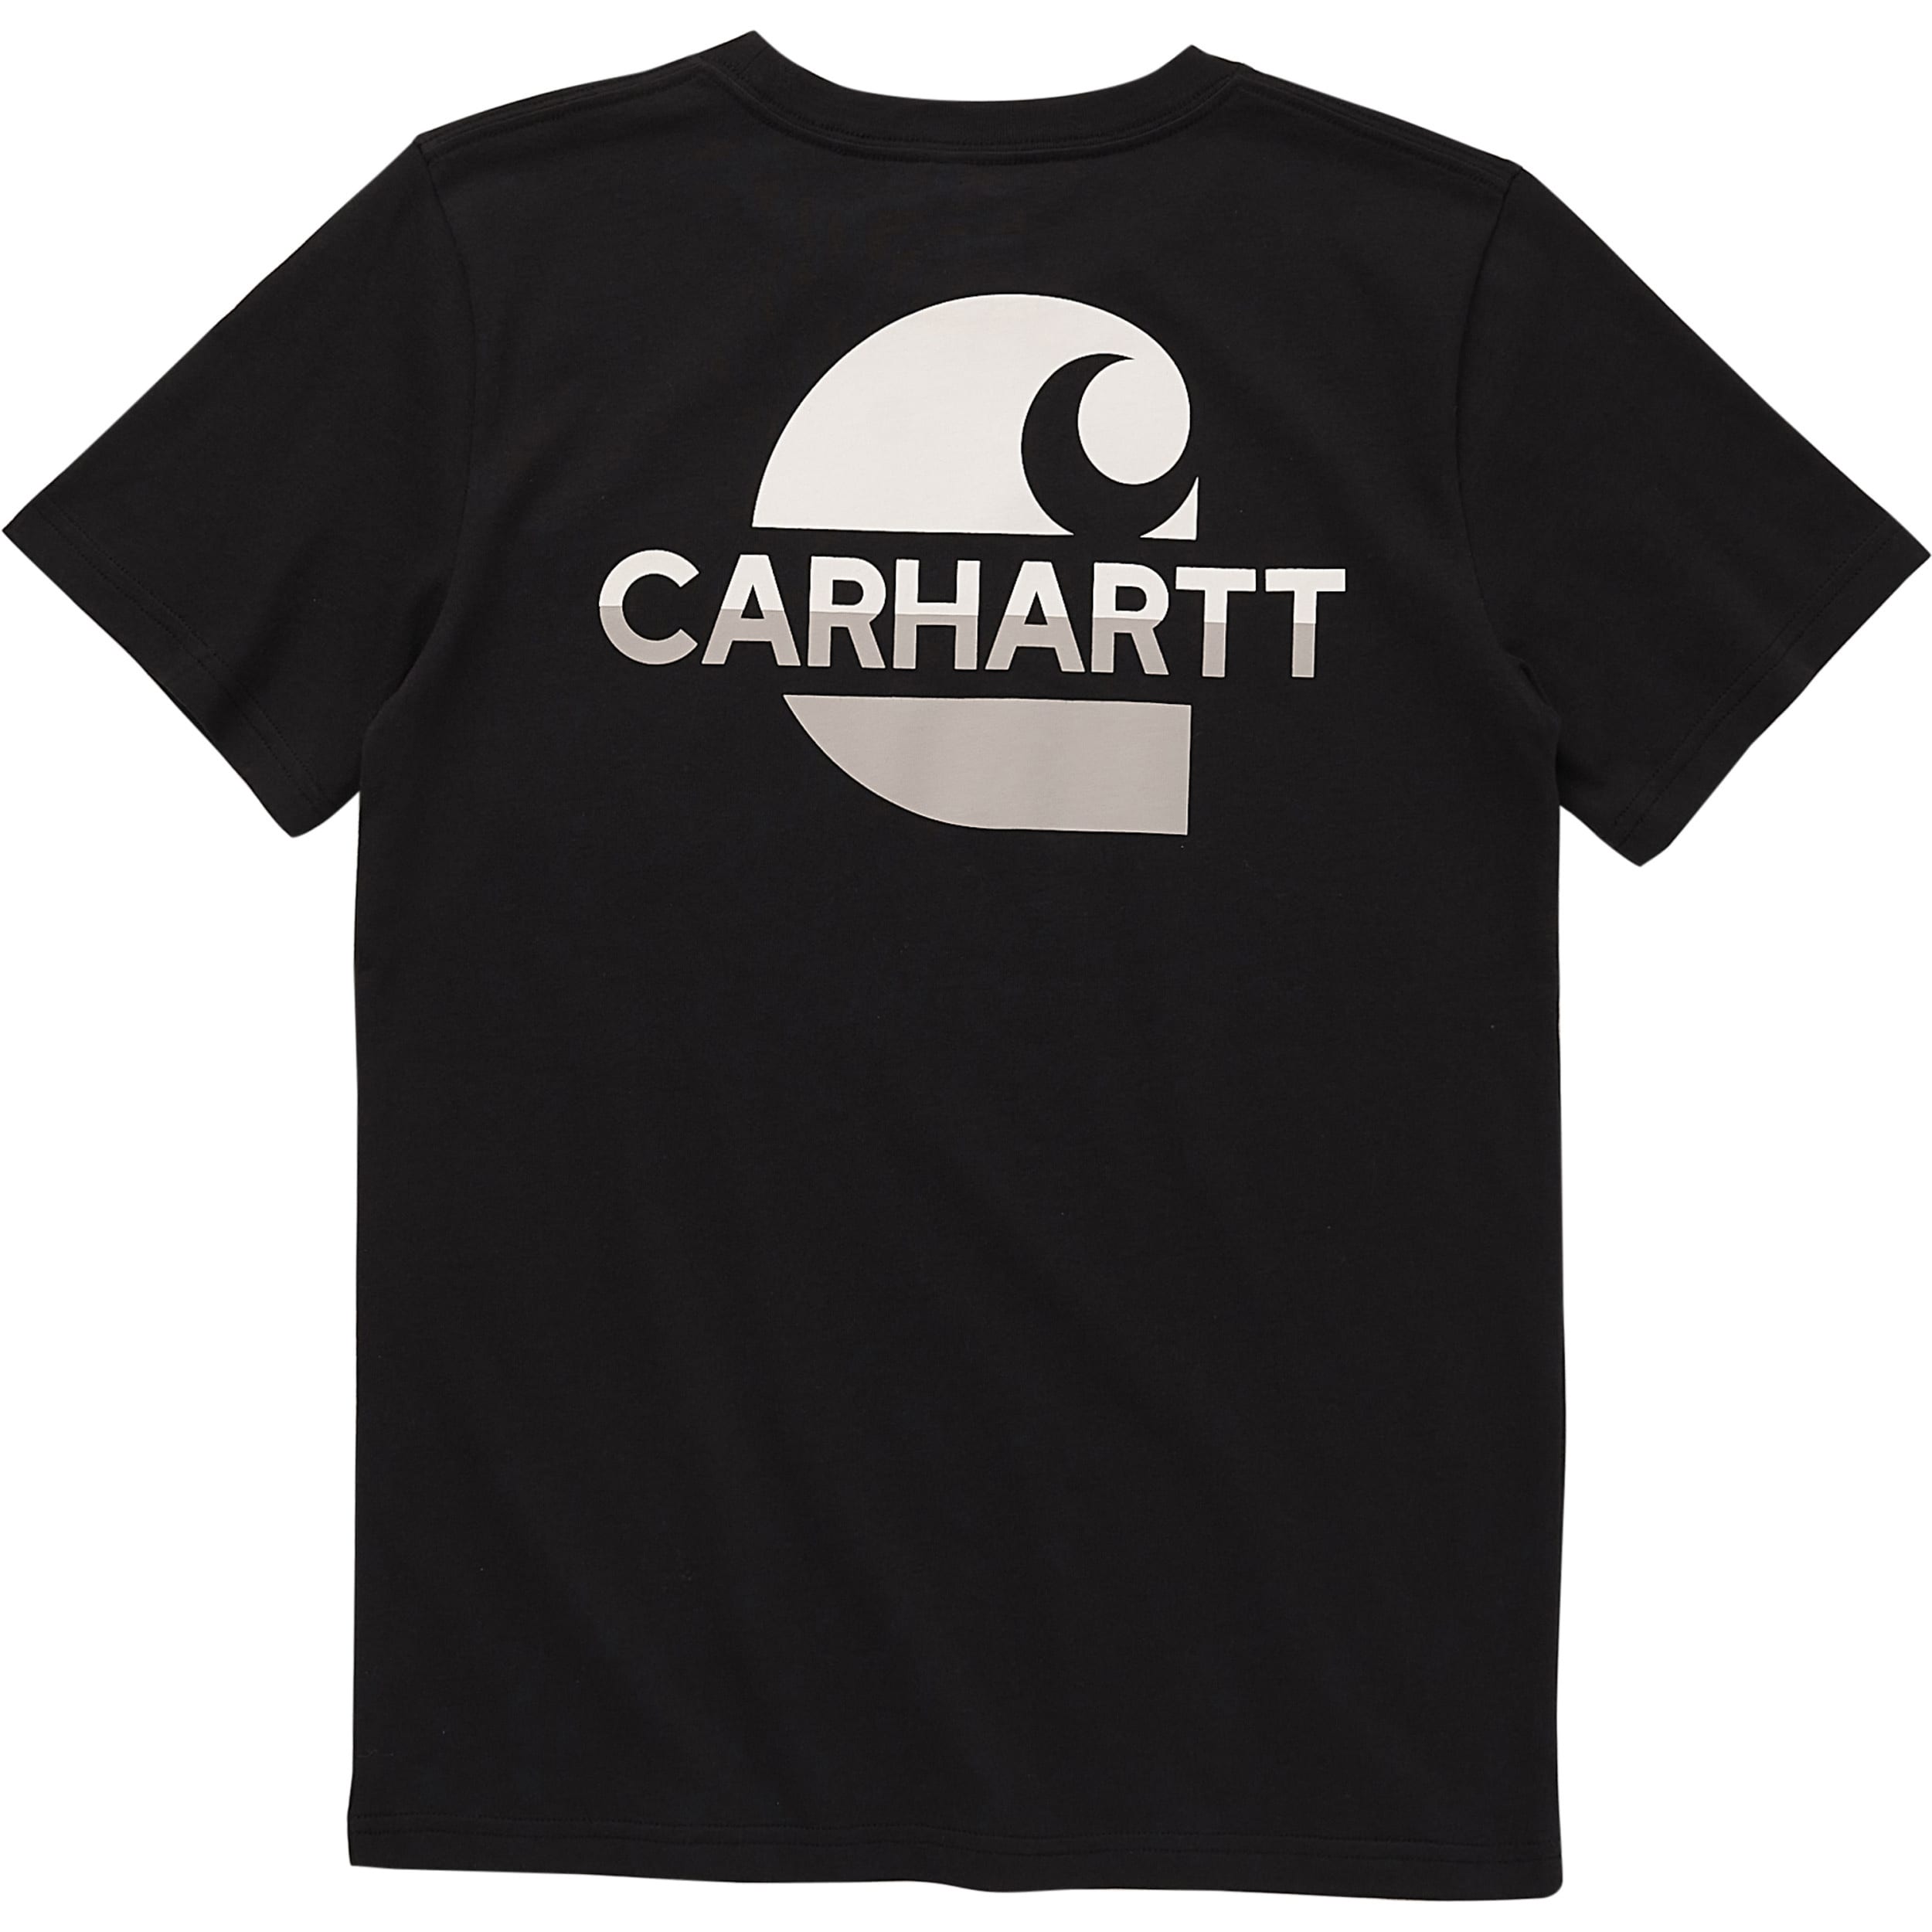 Carhartt Girl's Long Sleeve Graphic Sweatshirt - CA9983-L193-UA1-5